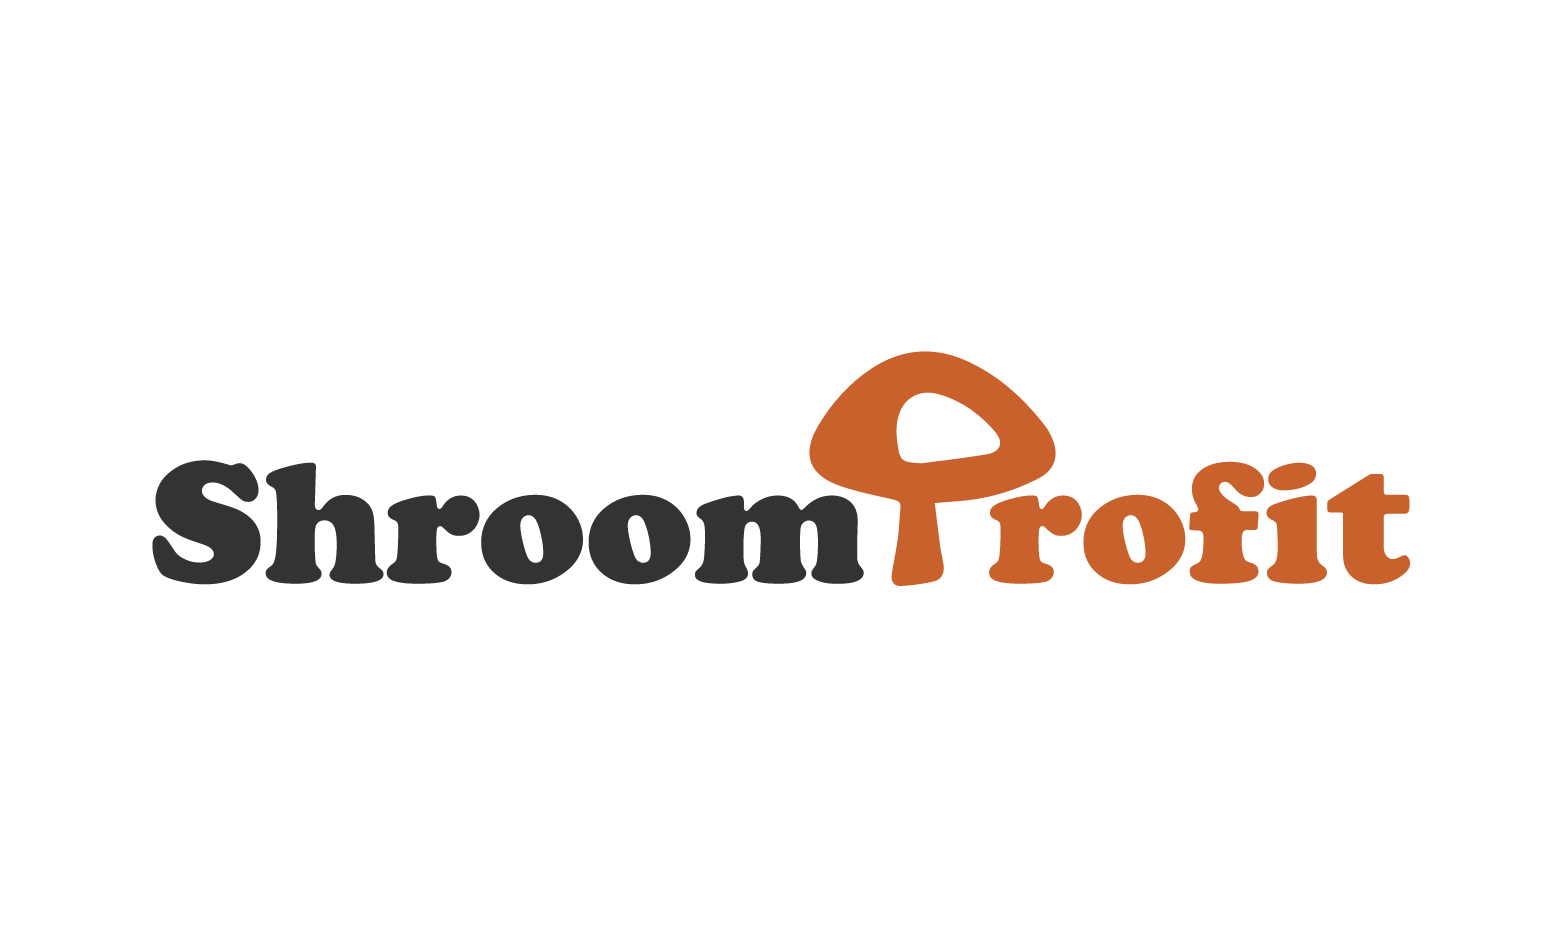 ShroomProfit.com - Creative brandable domain for sale